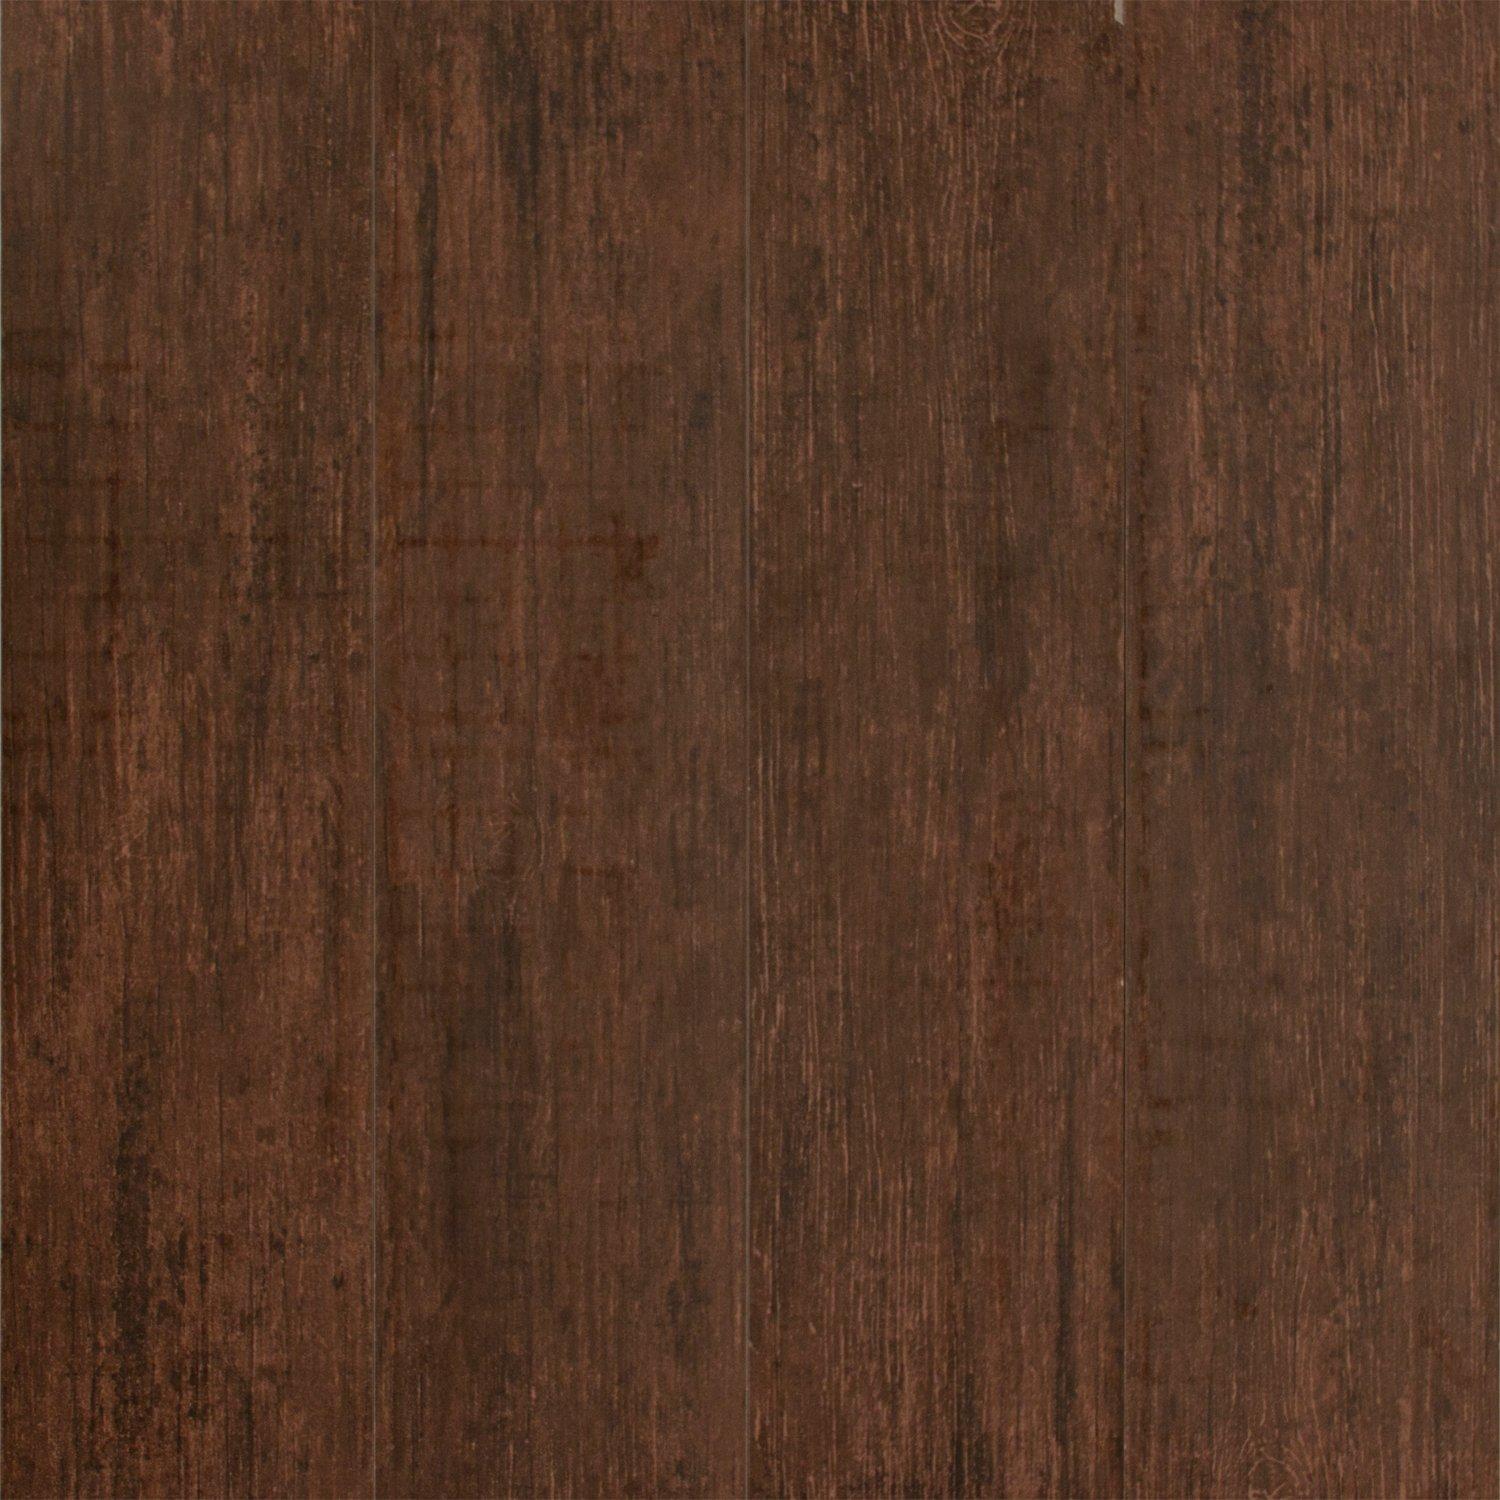 Chestnut C07 - Wood Planks Wall Decor 3D